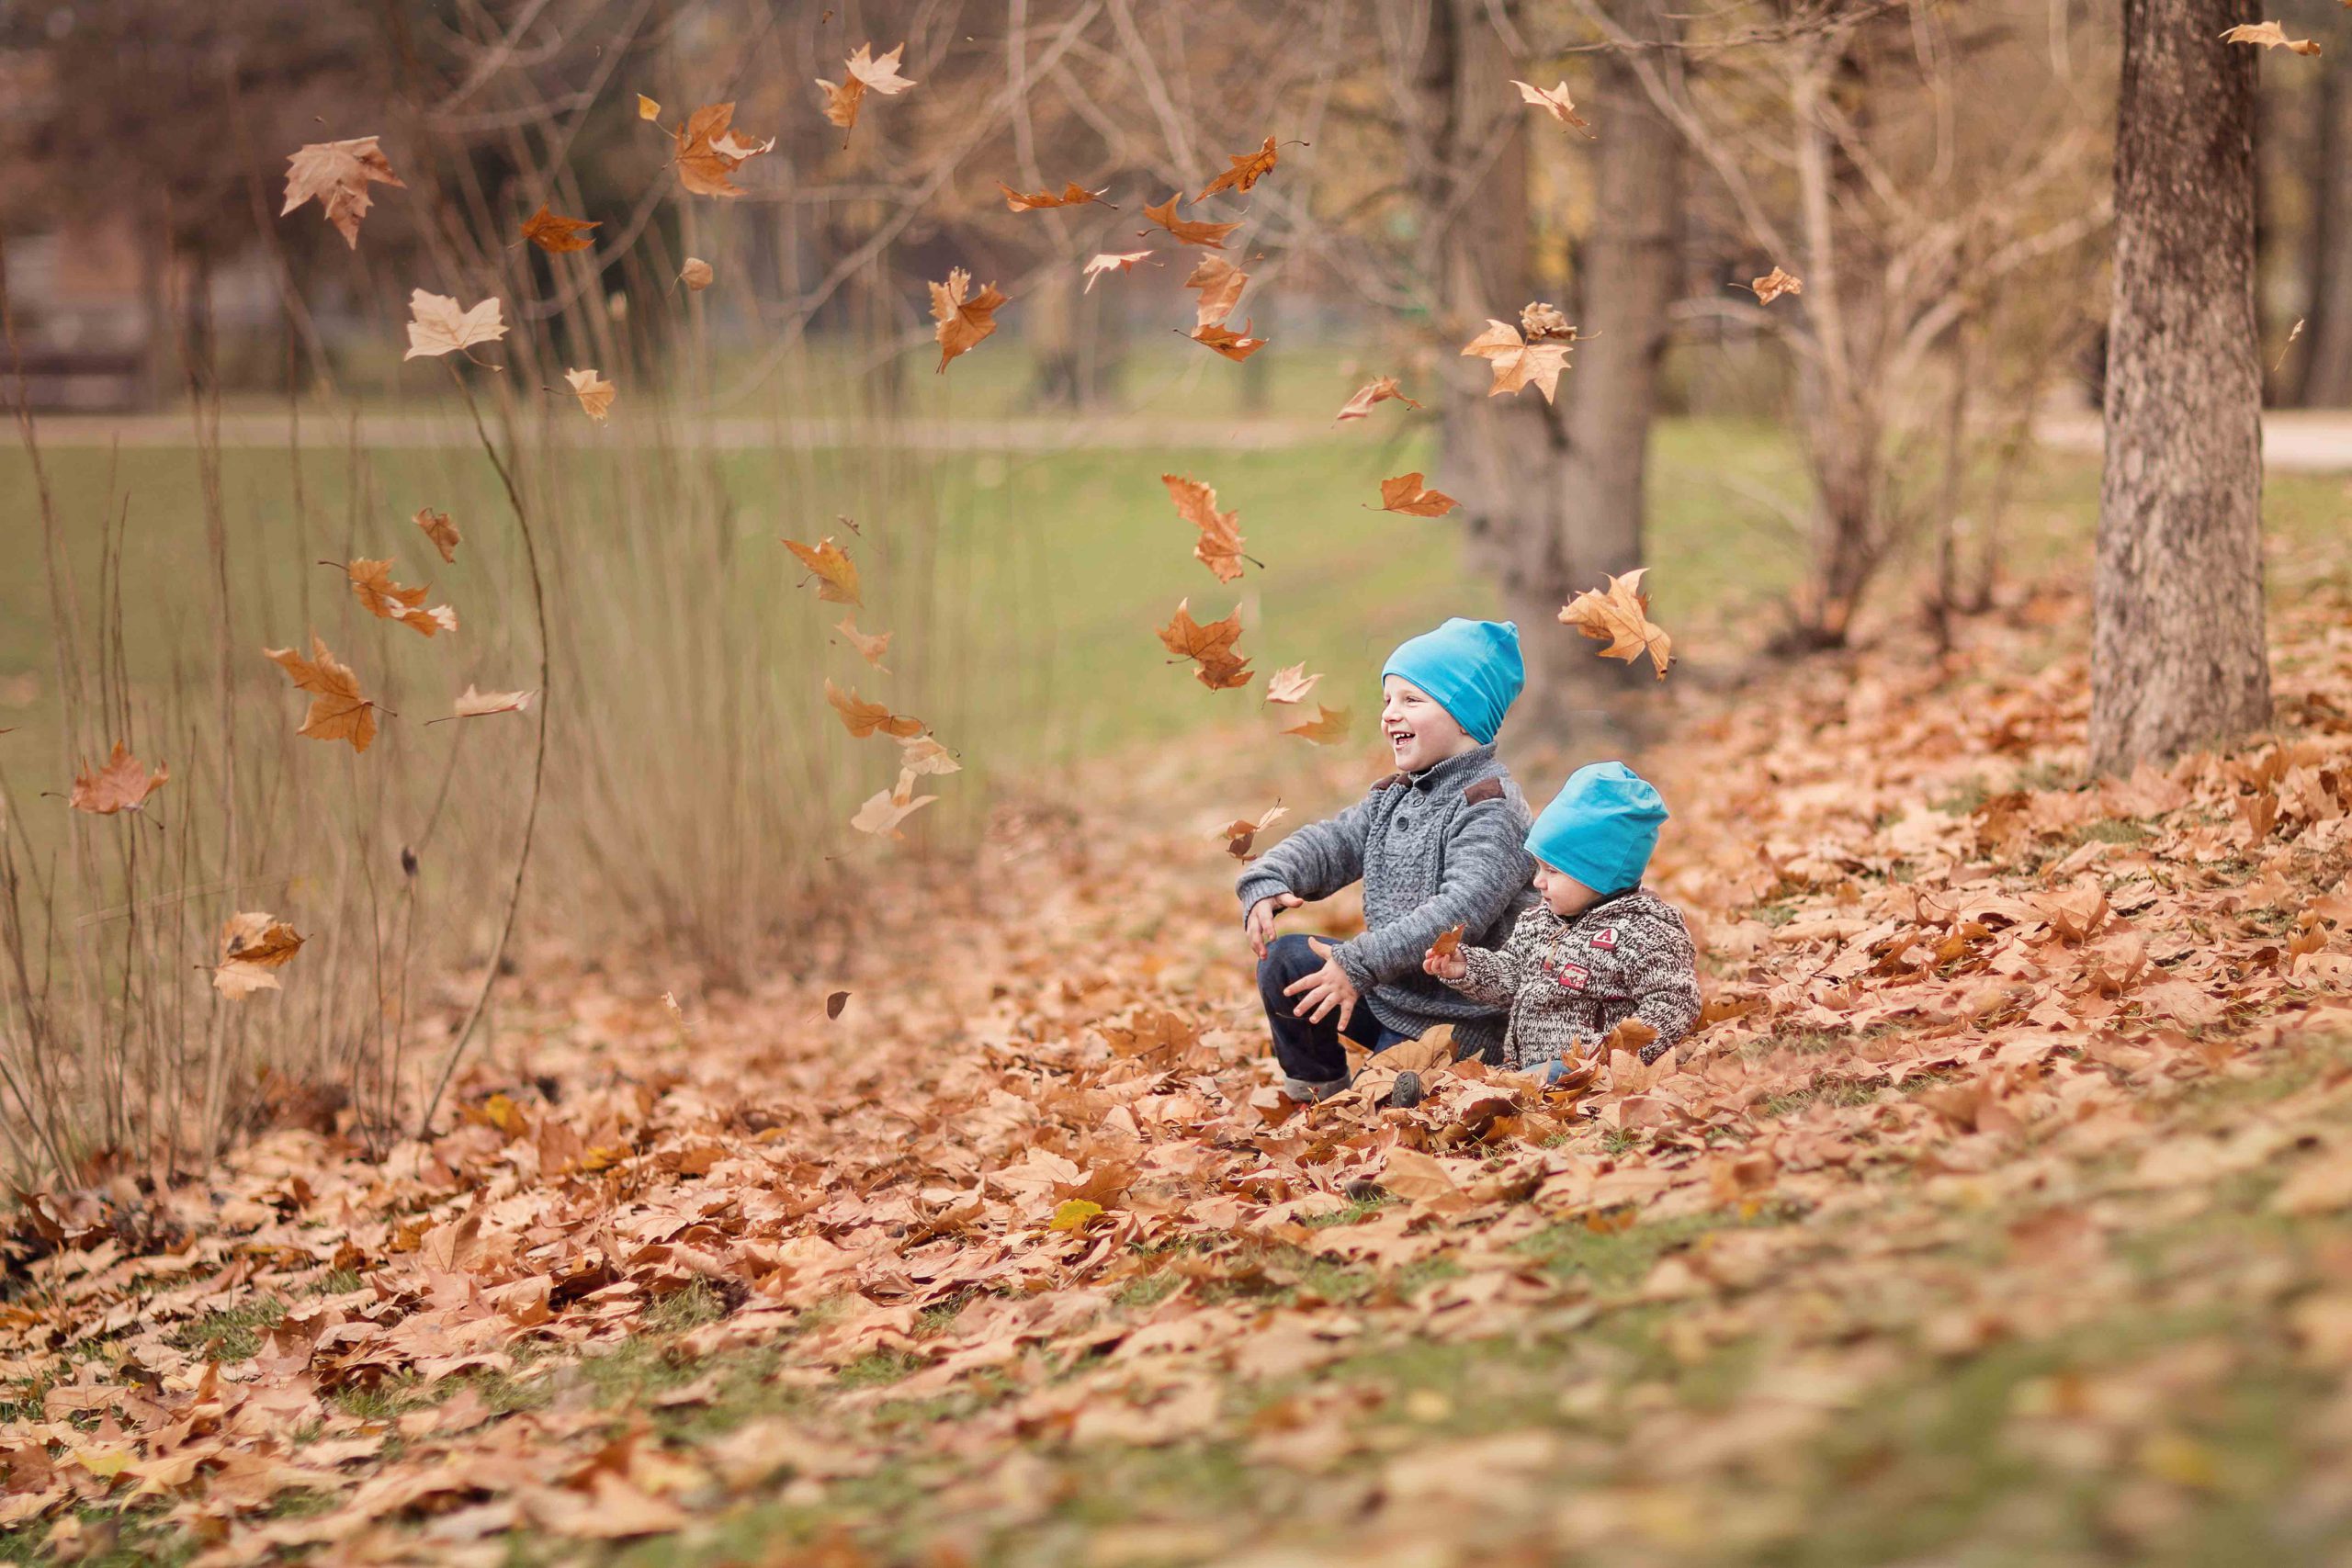 dvaja chlapci sa hraju s jesennym listim